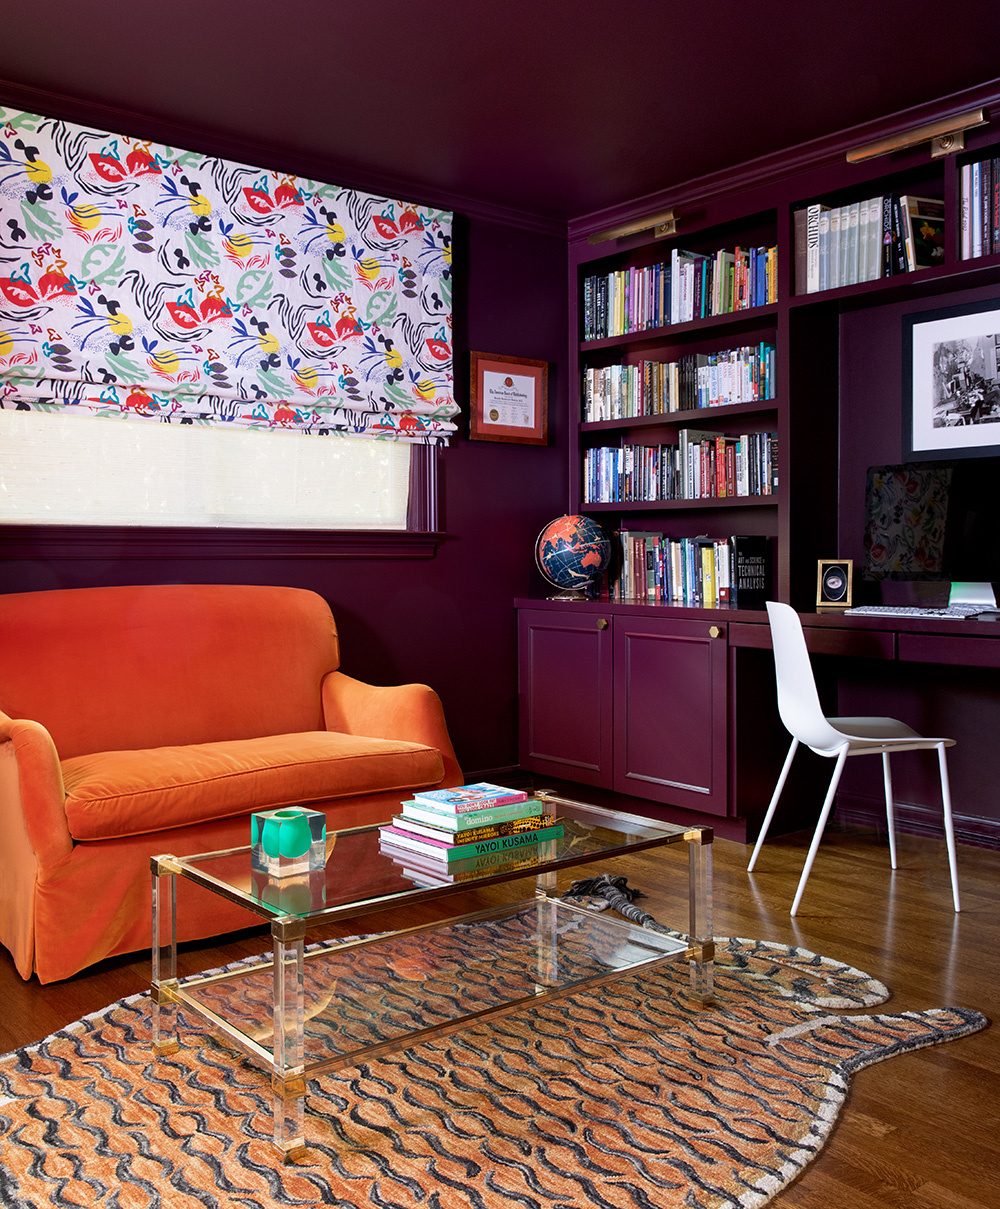 Purple furniture and walls